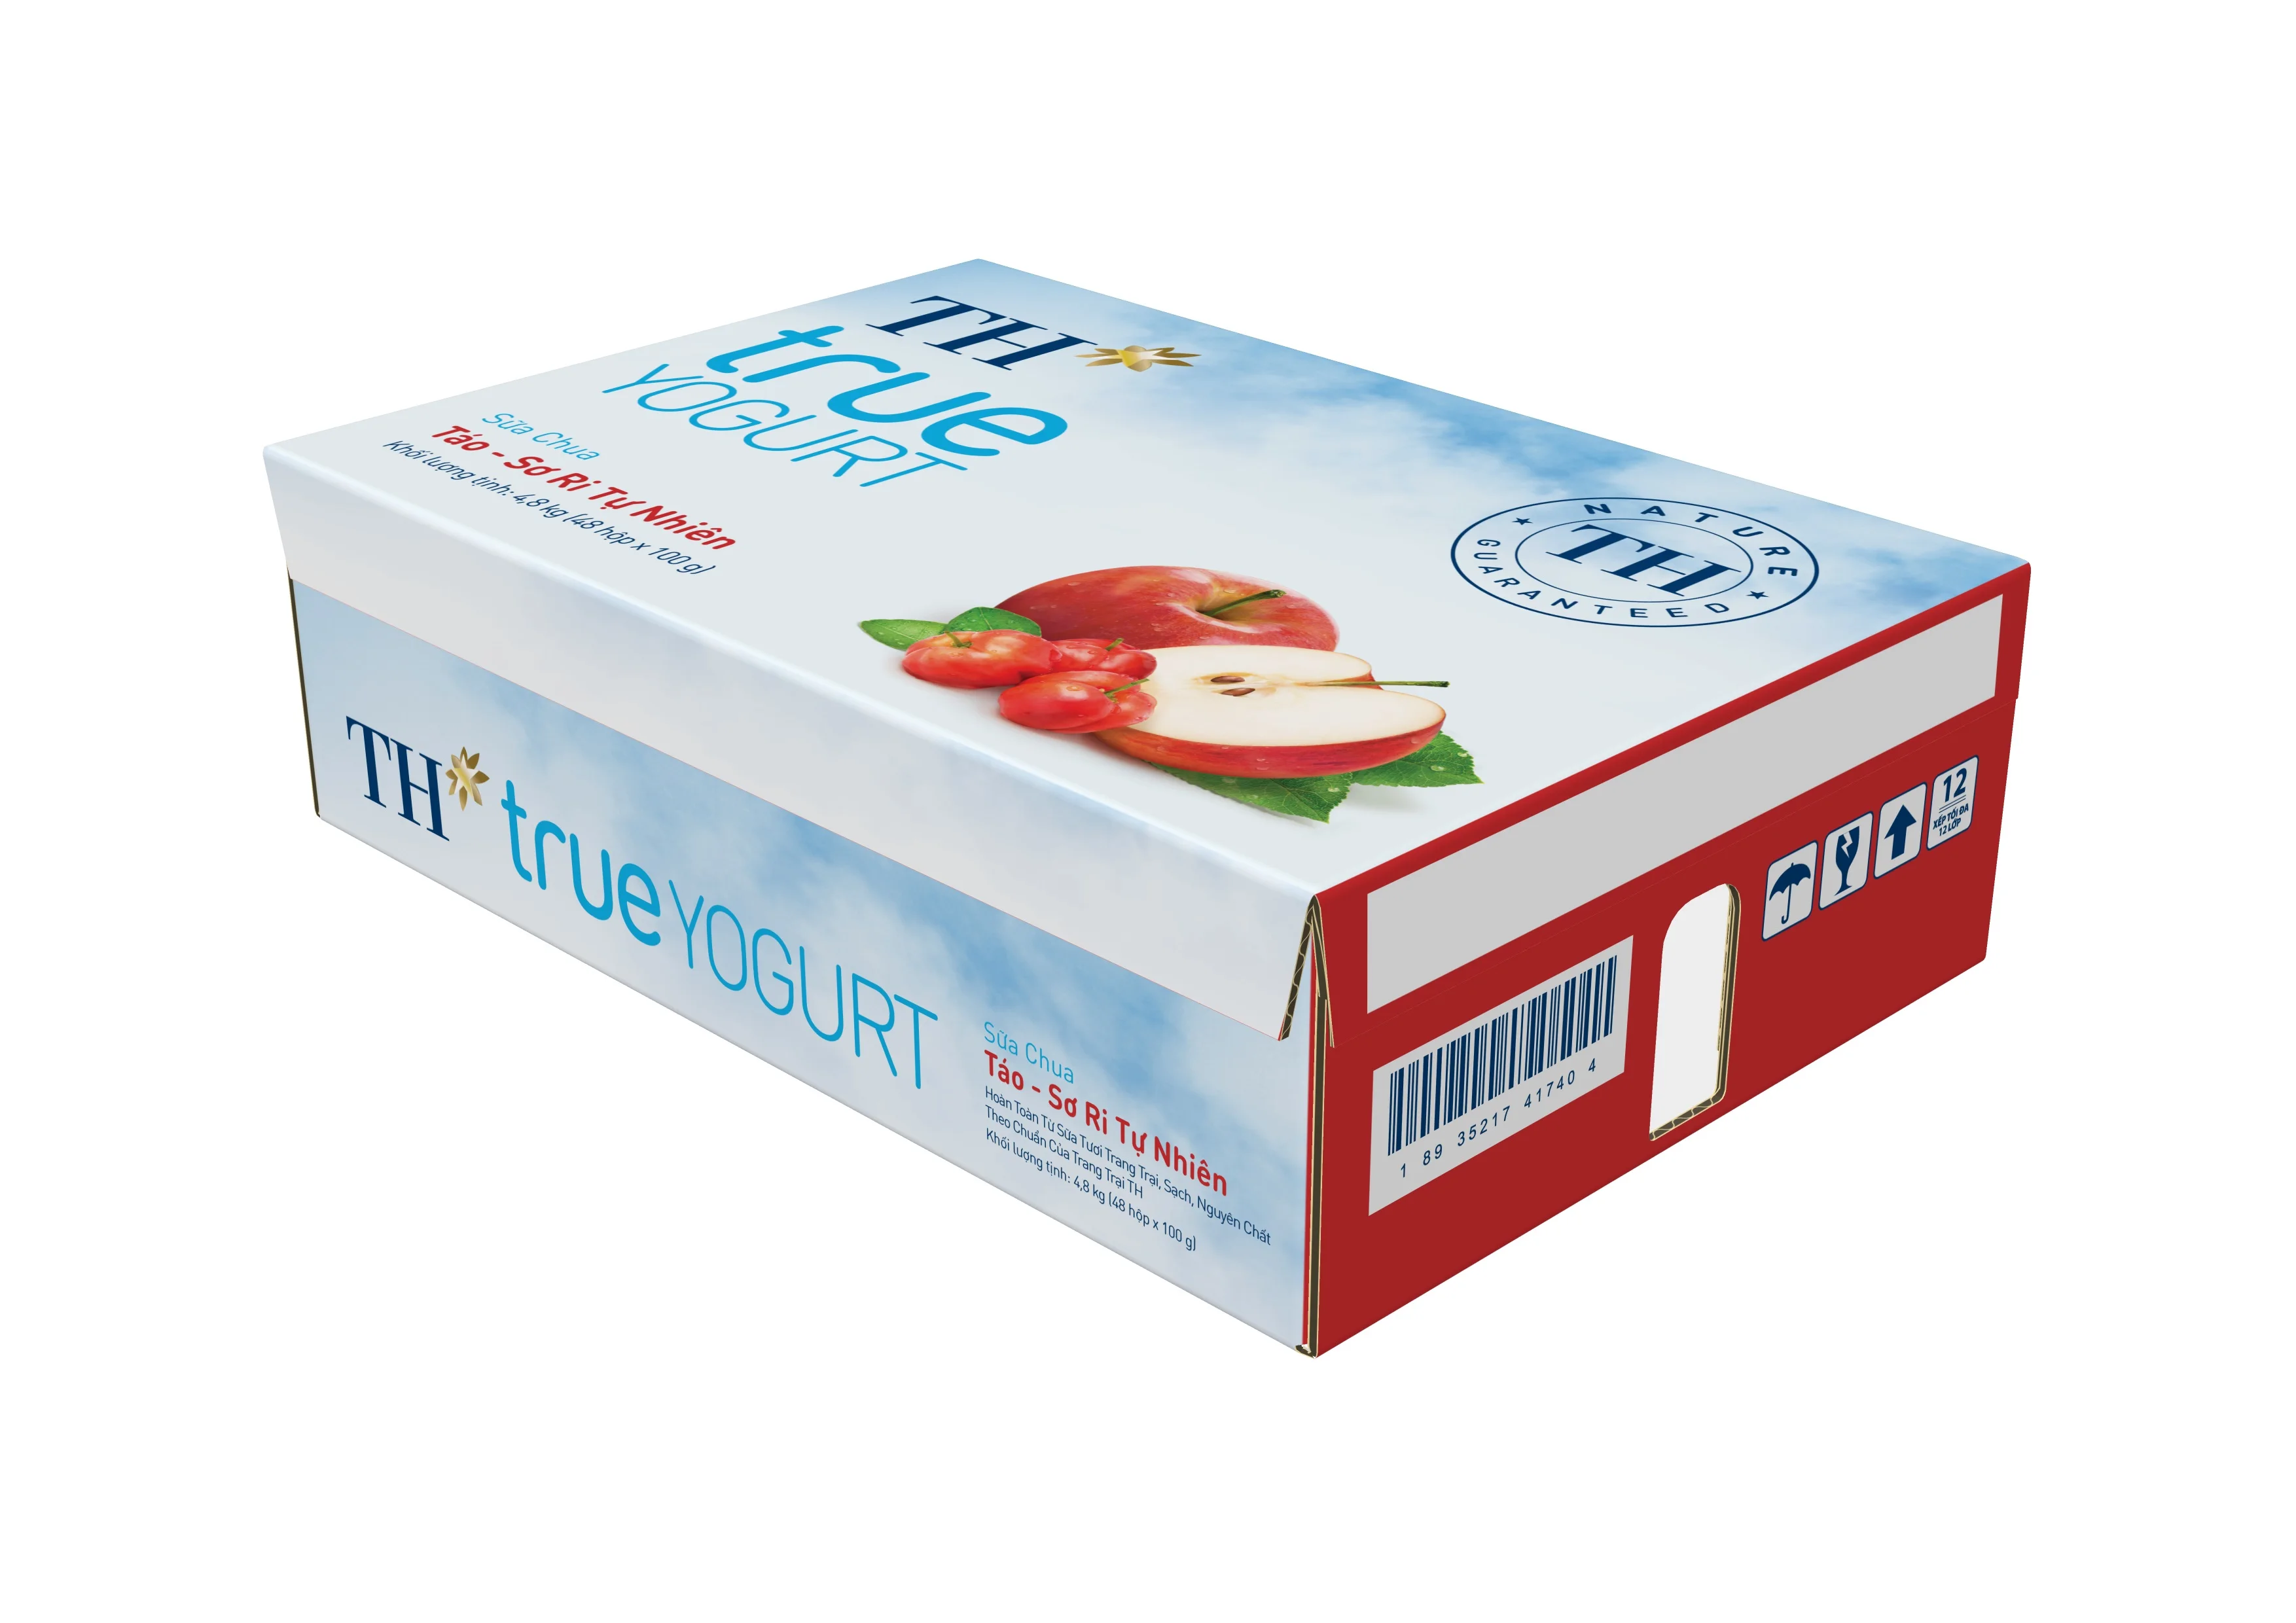 TH true YOGURT- Natural Apple and Acerola Cherry Yogurt 100gx48C Nutrition Dairy Products Delicious Fruity Yogurt